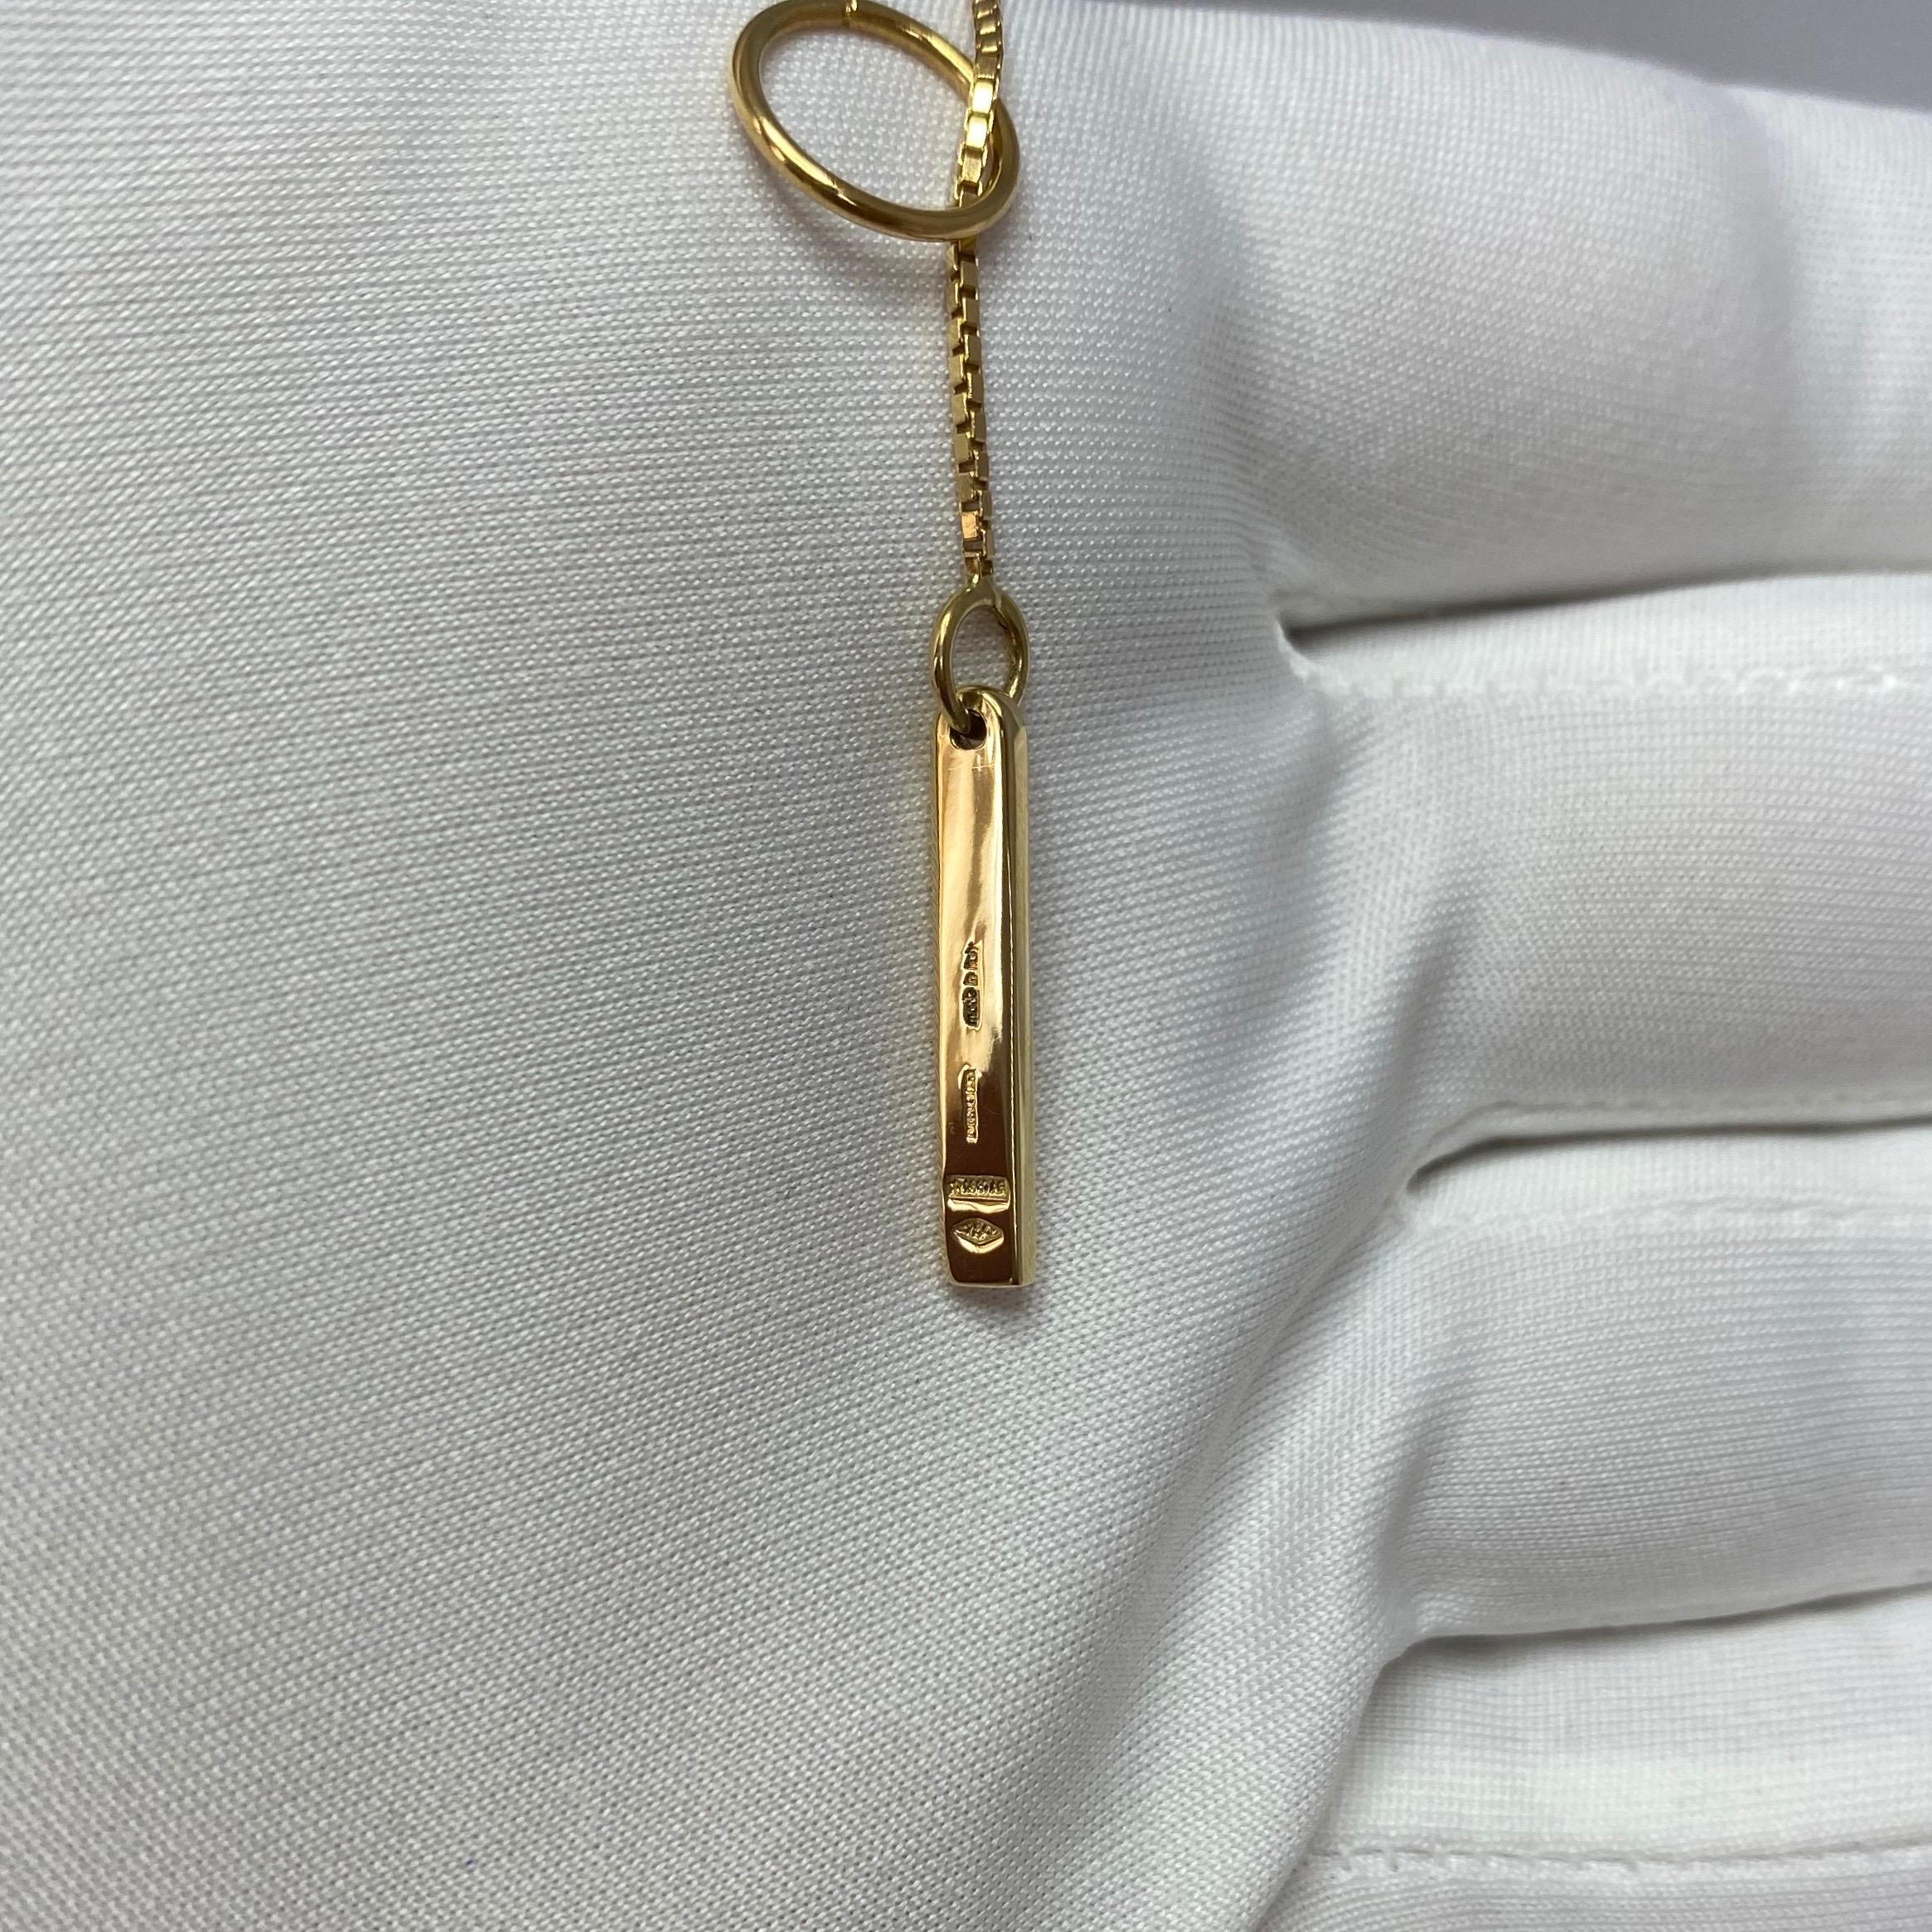 Women's or Men's Gucci 18 Karat Yellow Gold Bar Lariat Pendant Necklace with Original Gucci Box